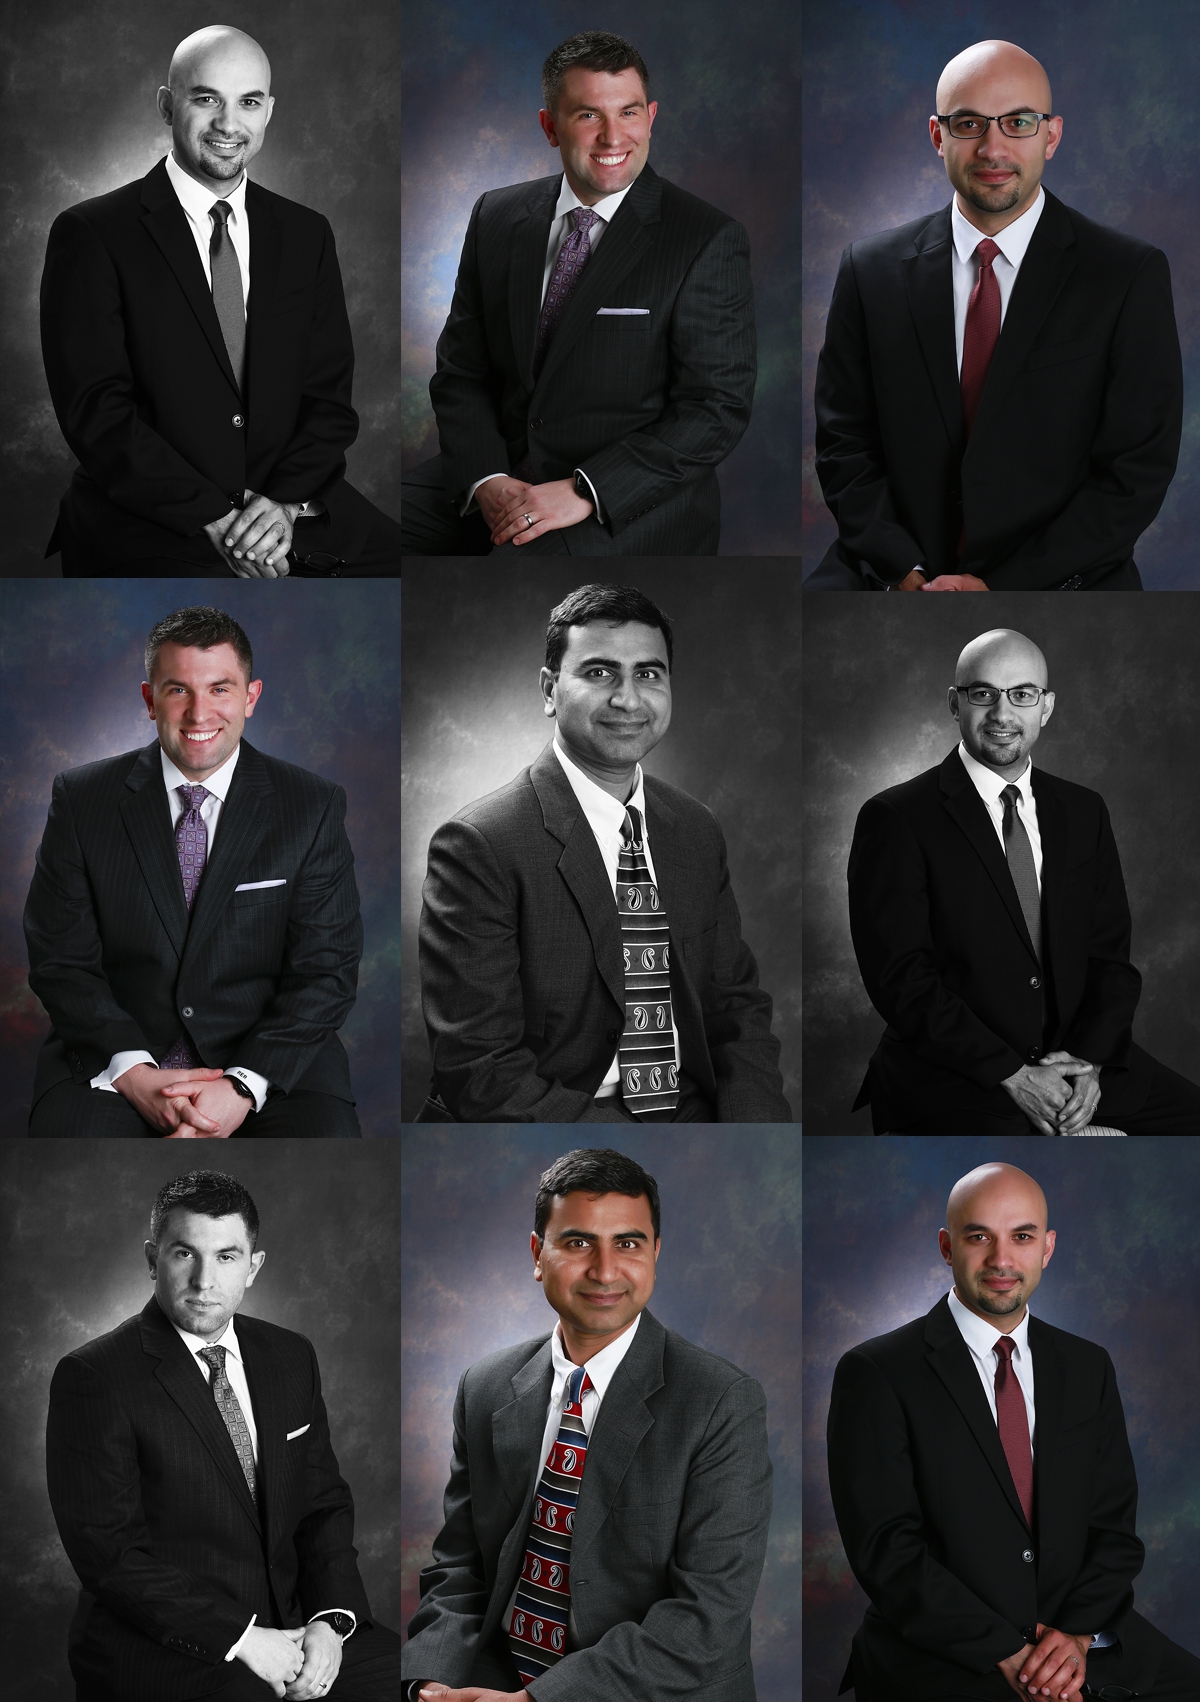 Virginia Beach Portrait Photographer | Marketing Portraits for Surgeons at EVMS